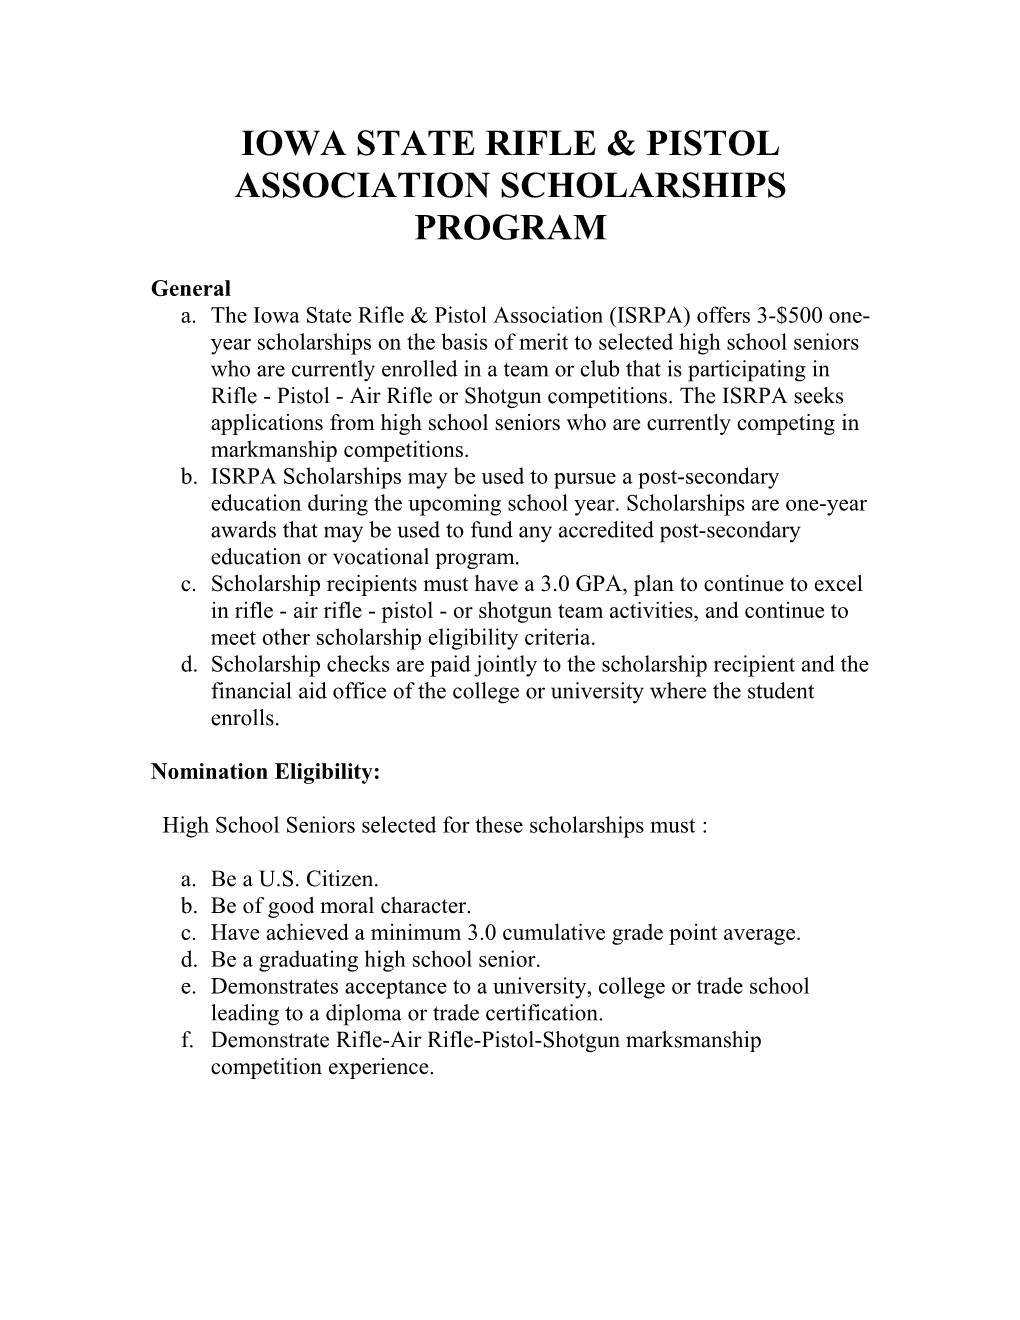 IASRPA Program Scholarships